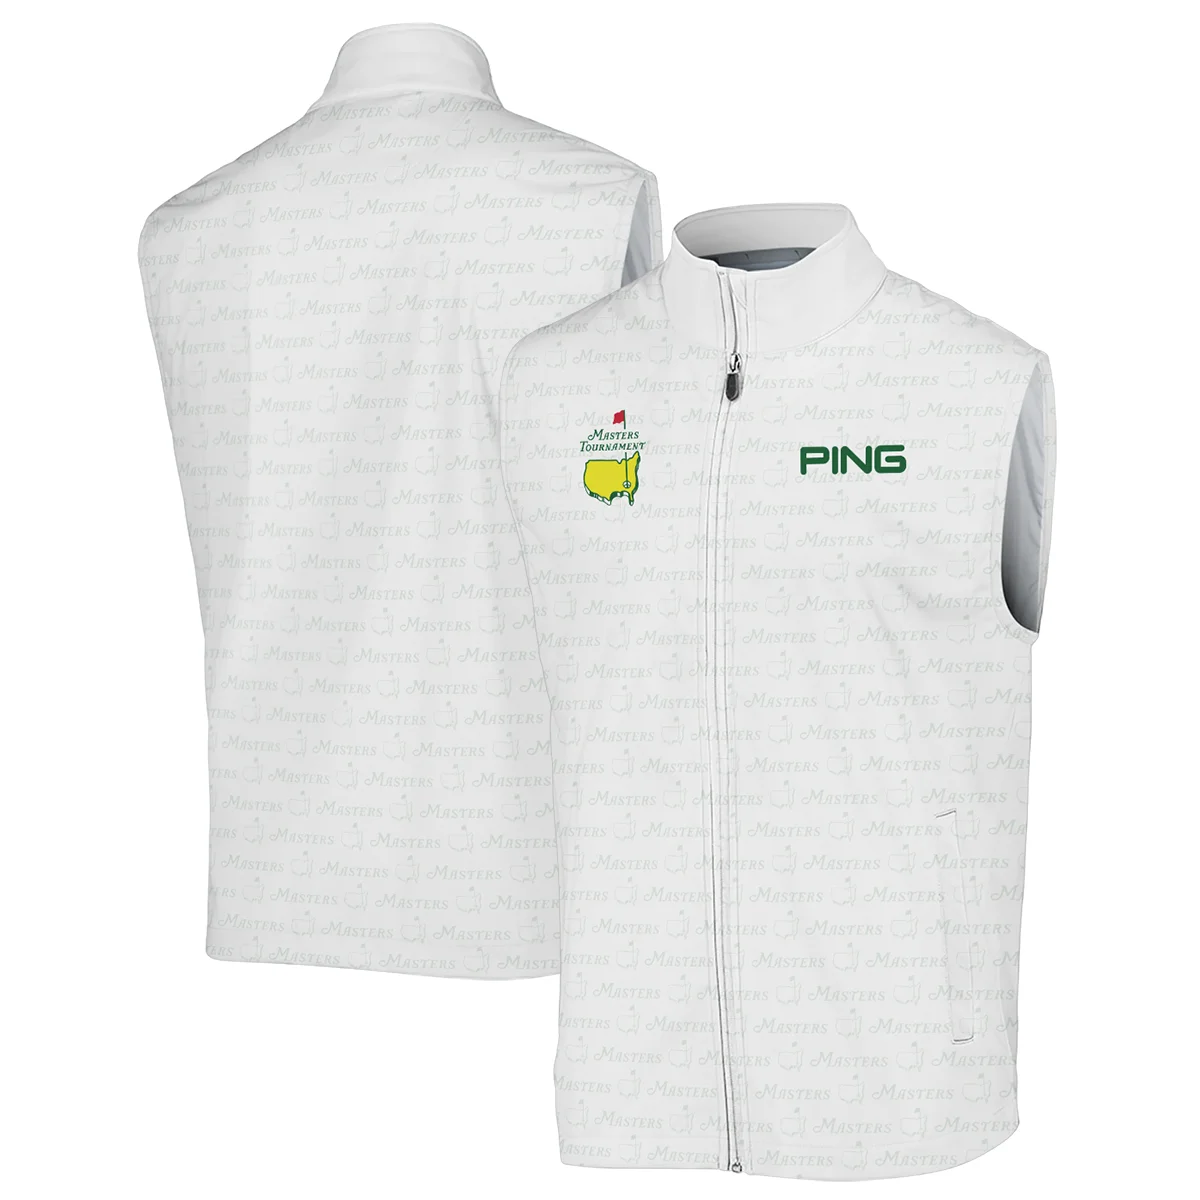 Golf Pattern Cup White Mix Green Masters Tournament Ping Unisex Sweatshirt Style Classic Sweatshirt